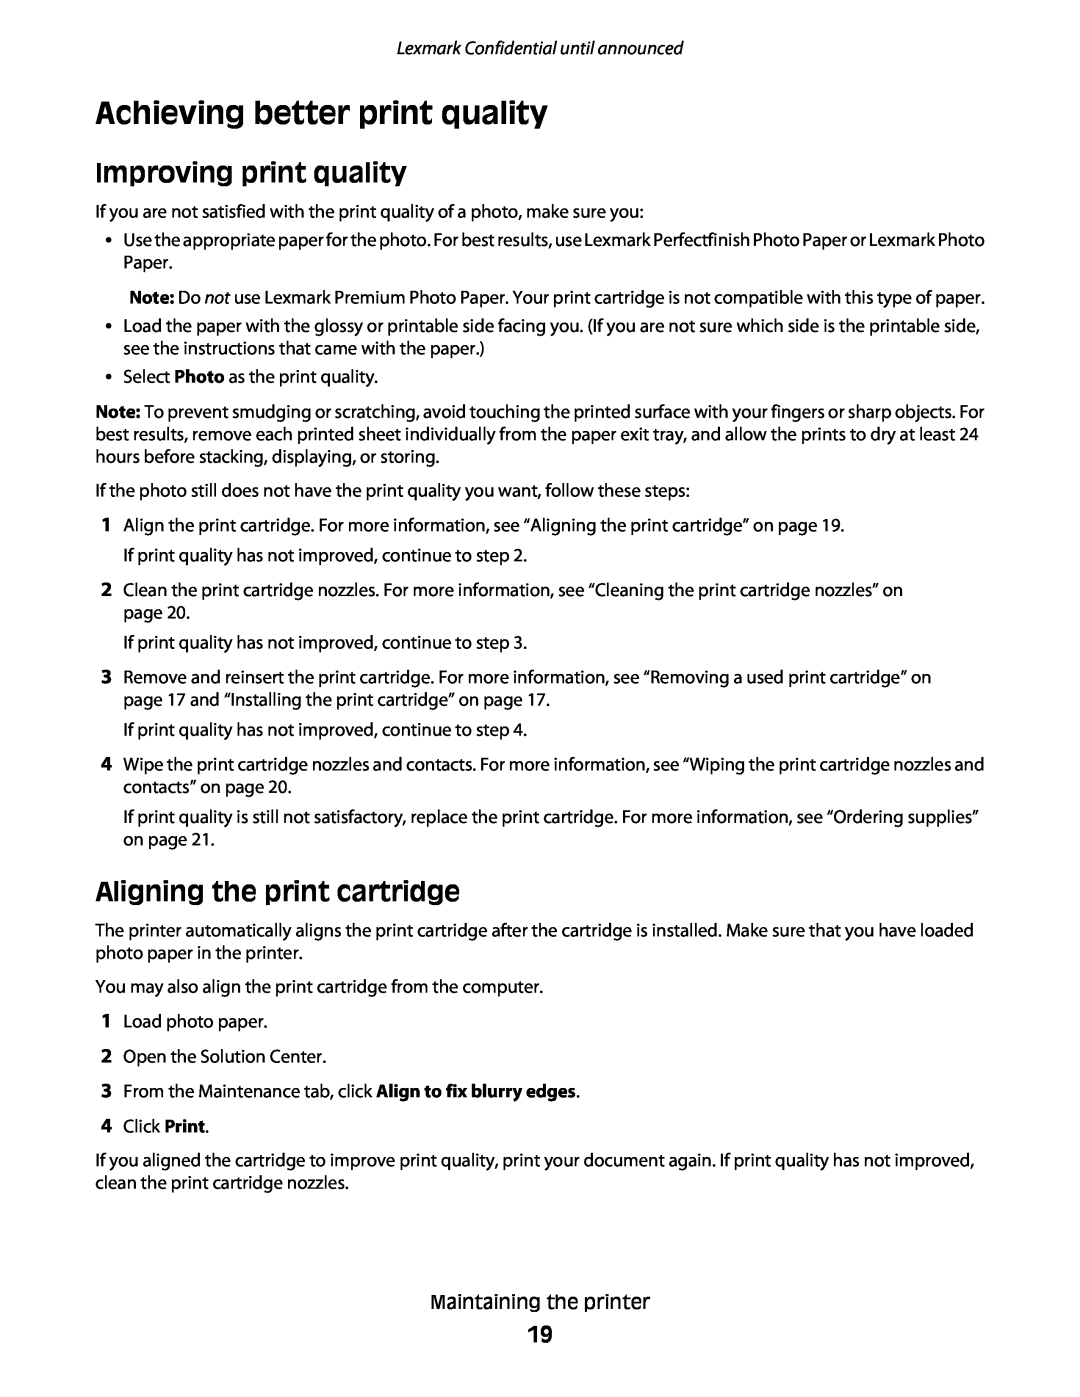 Lexmark P200 manual Achieving better print quality, Improving print quality, Aligning the print cartridge 